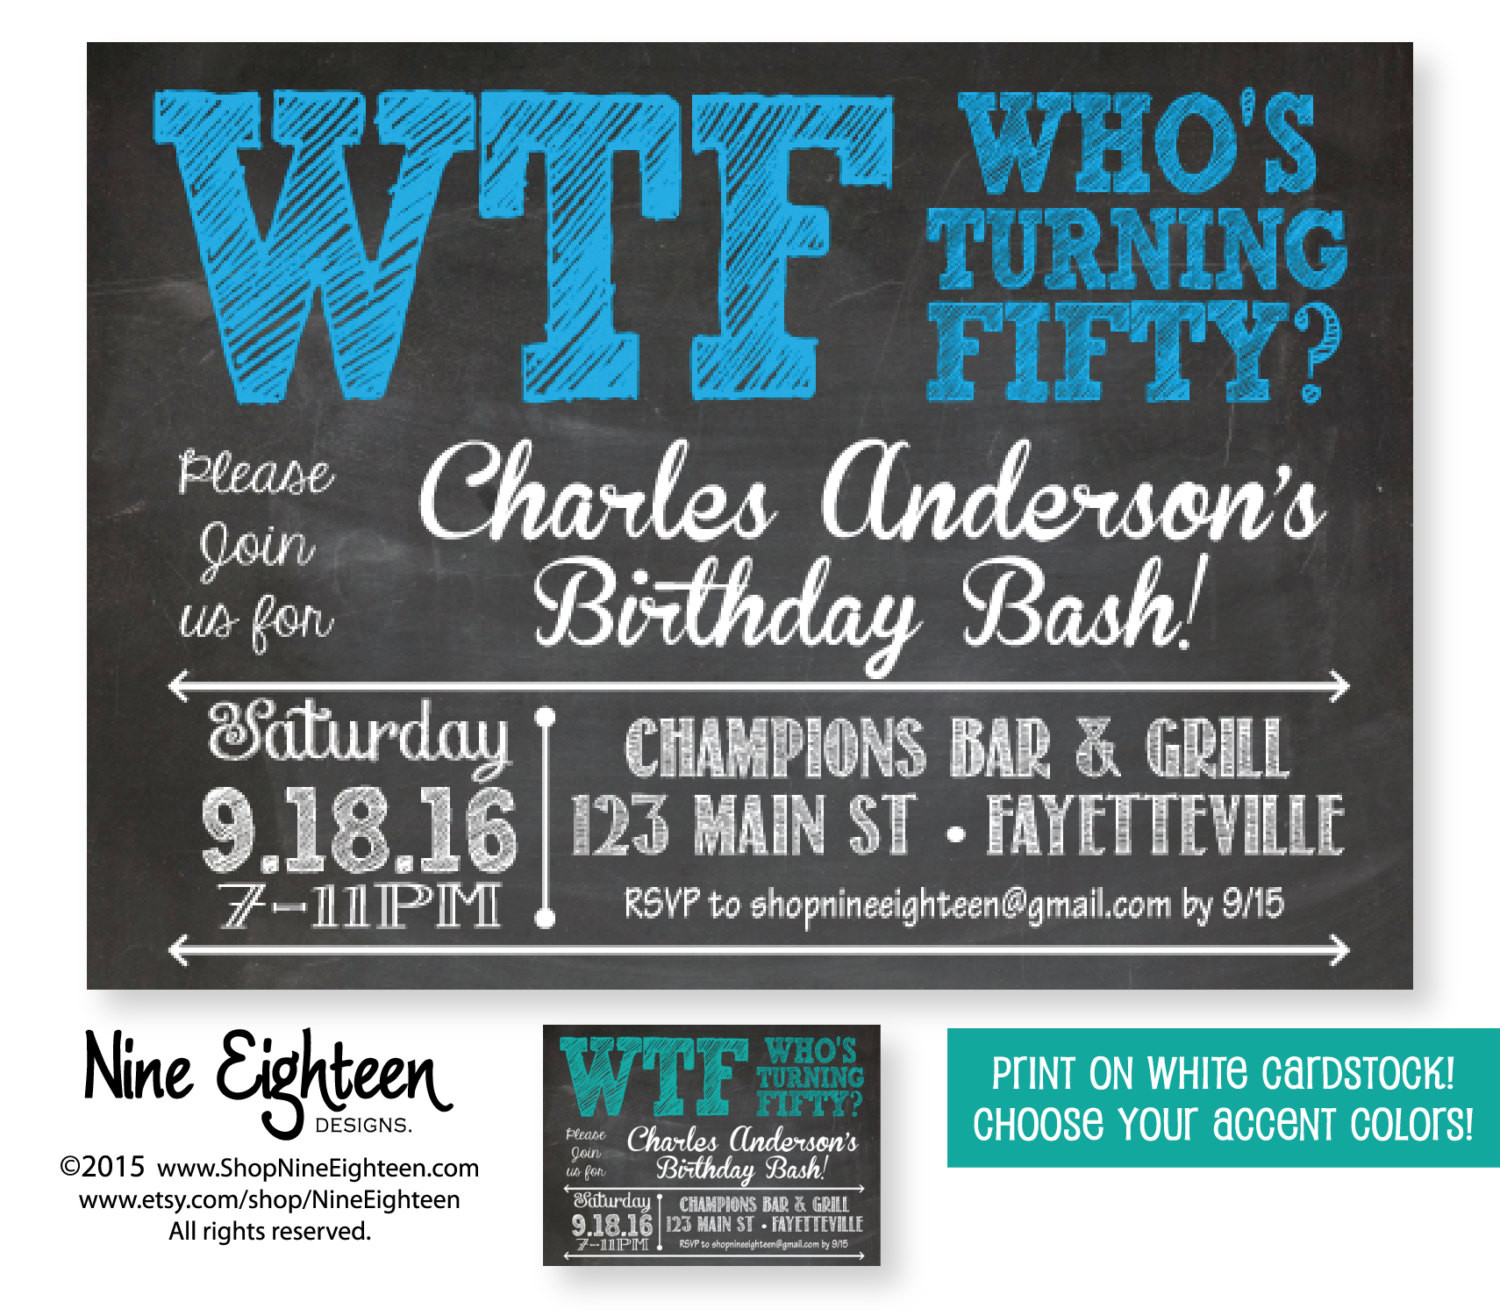 50 Birthday Party Invitations
 50th Birthday Party Invitation WTF Who s Turning by